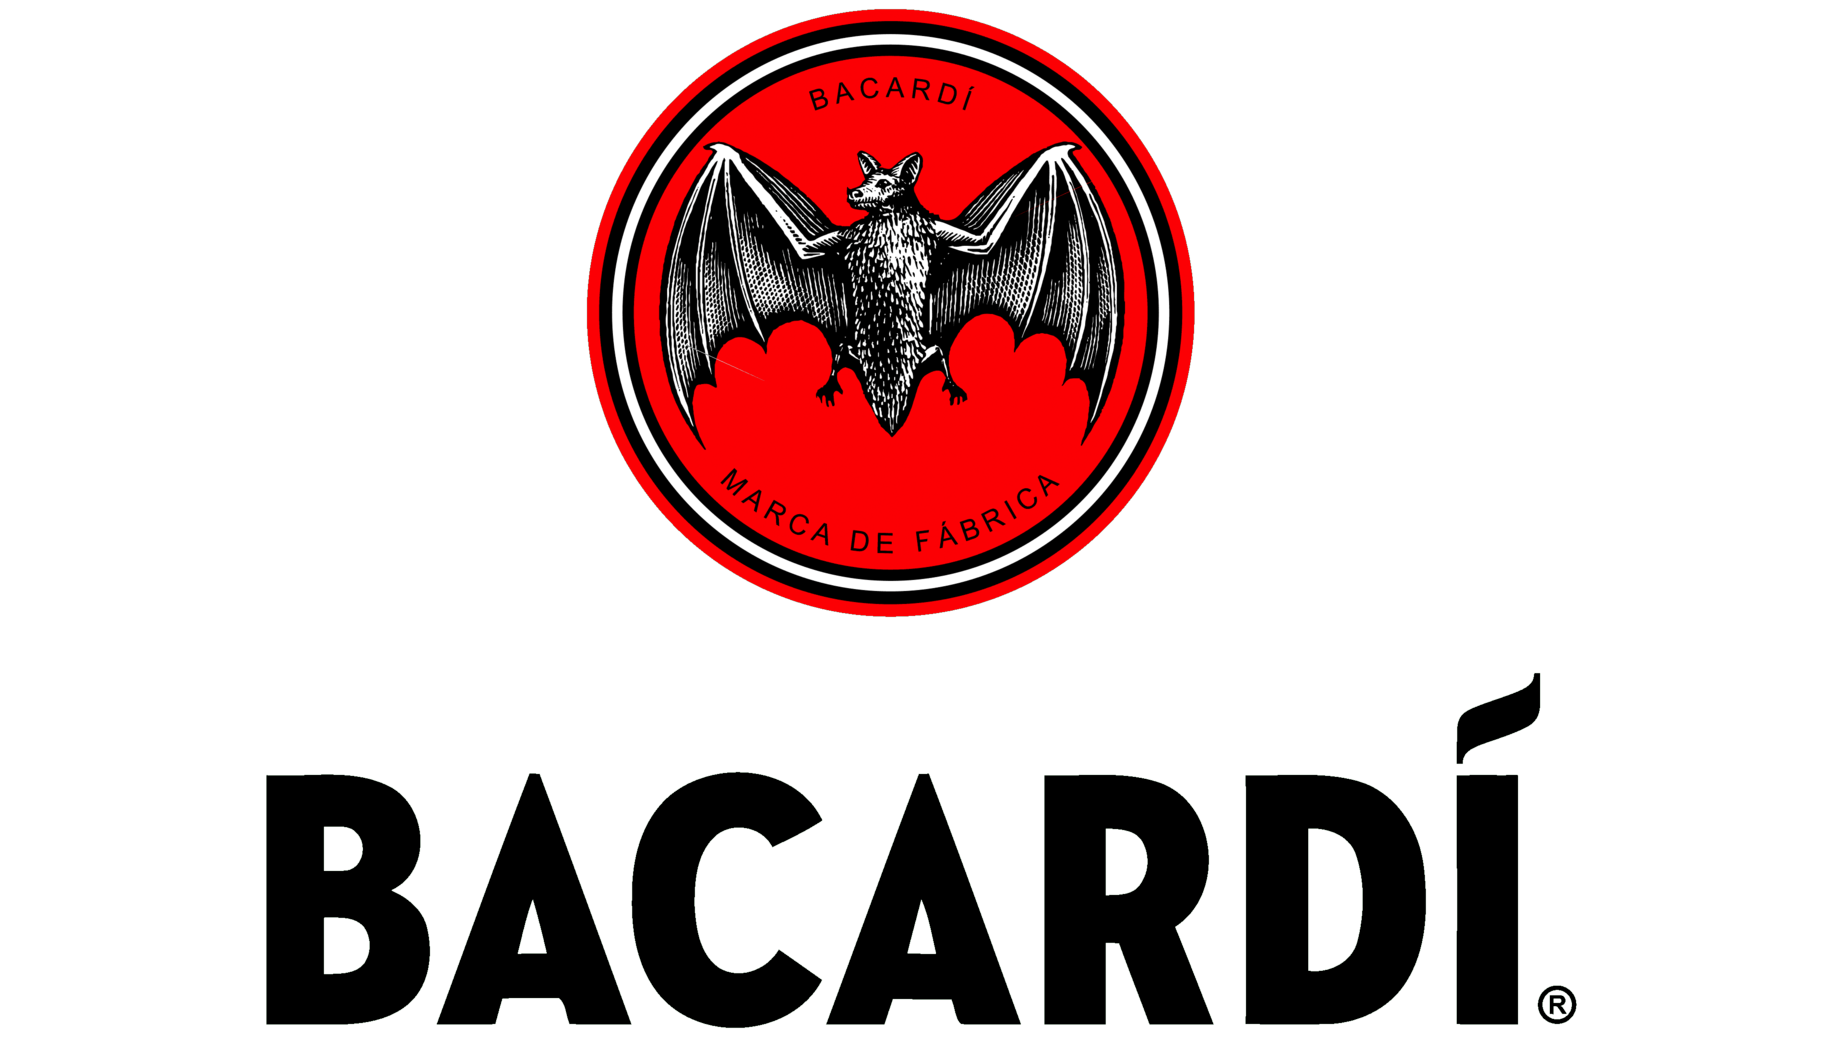 Bacardi symbol 2